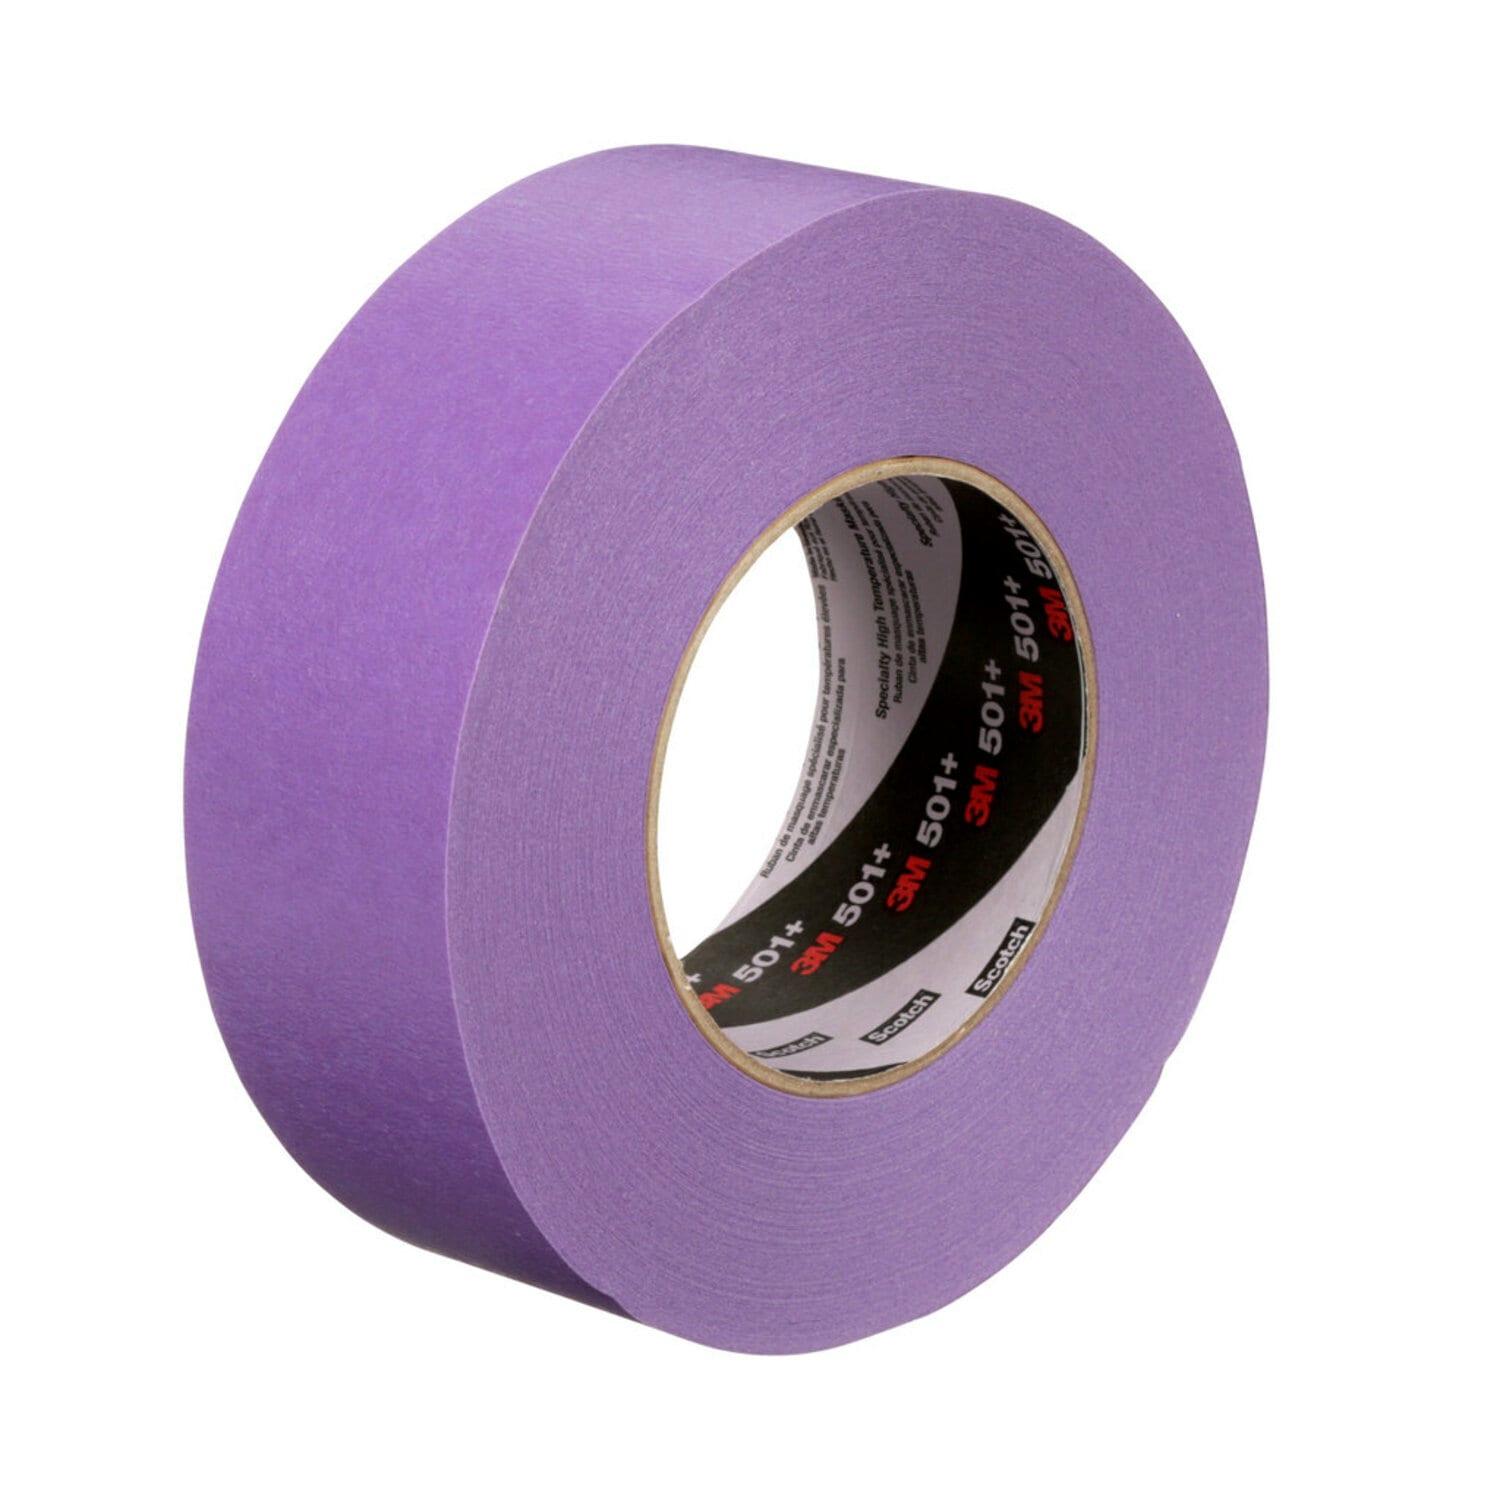 7100086765 - "3M Specialty High Temperature Masking Tape 501+, Purple, 1490 mm x 55
m,
 6.0 mil, 7 Rolls/Case"